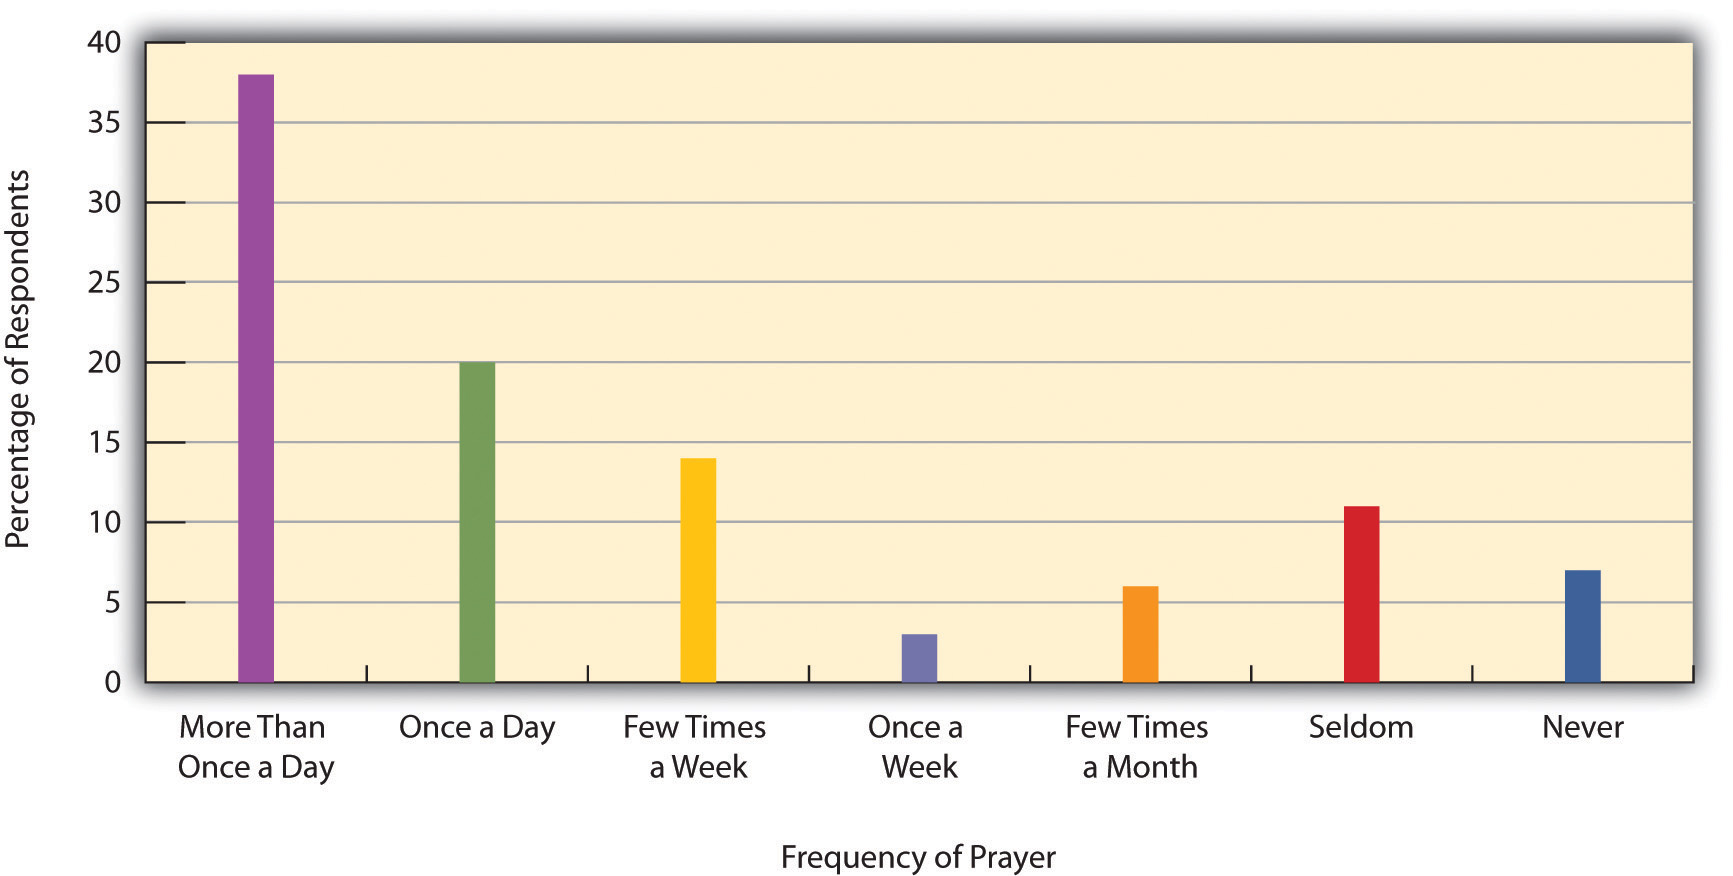 Frequency of Prayer